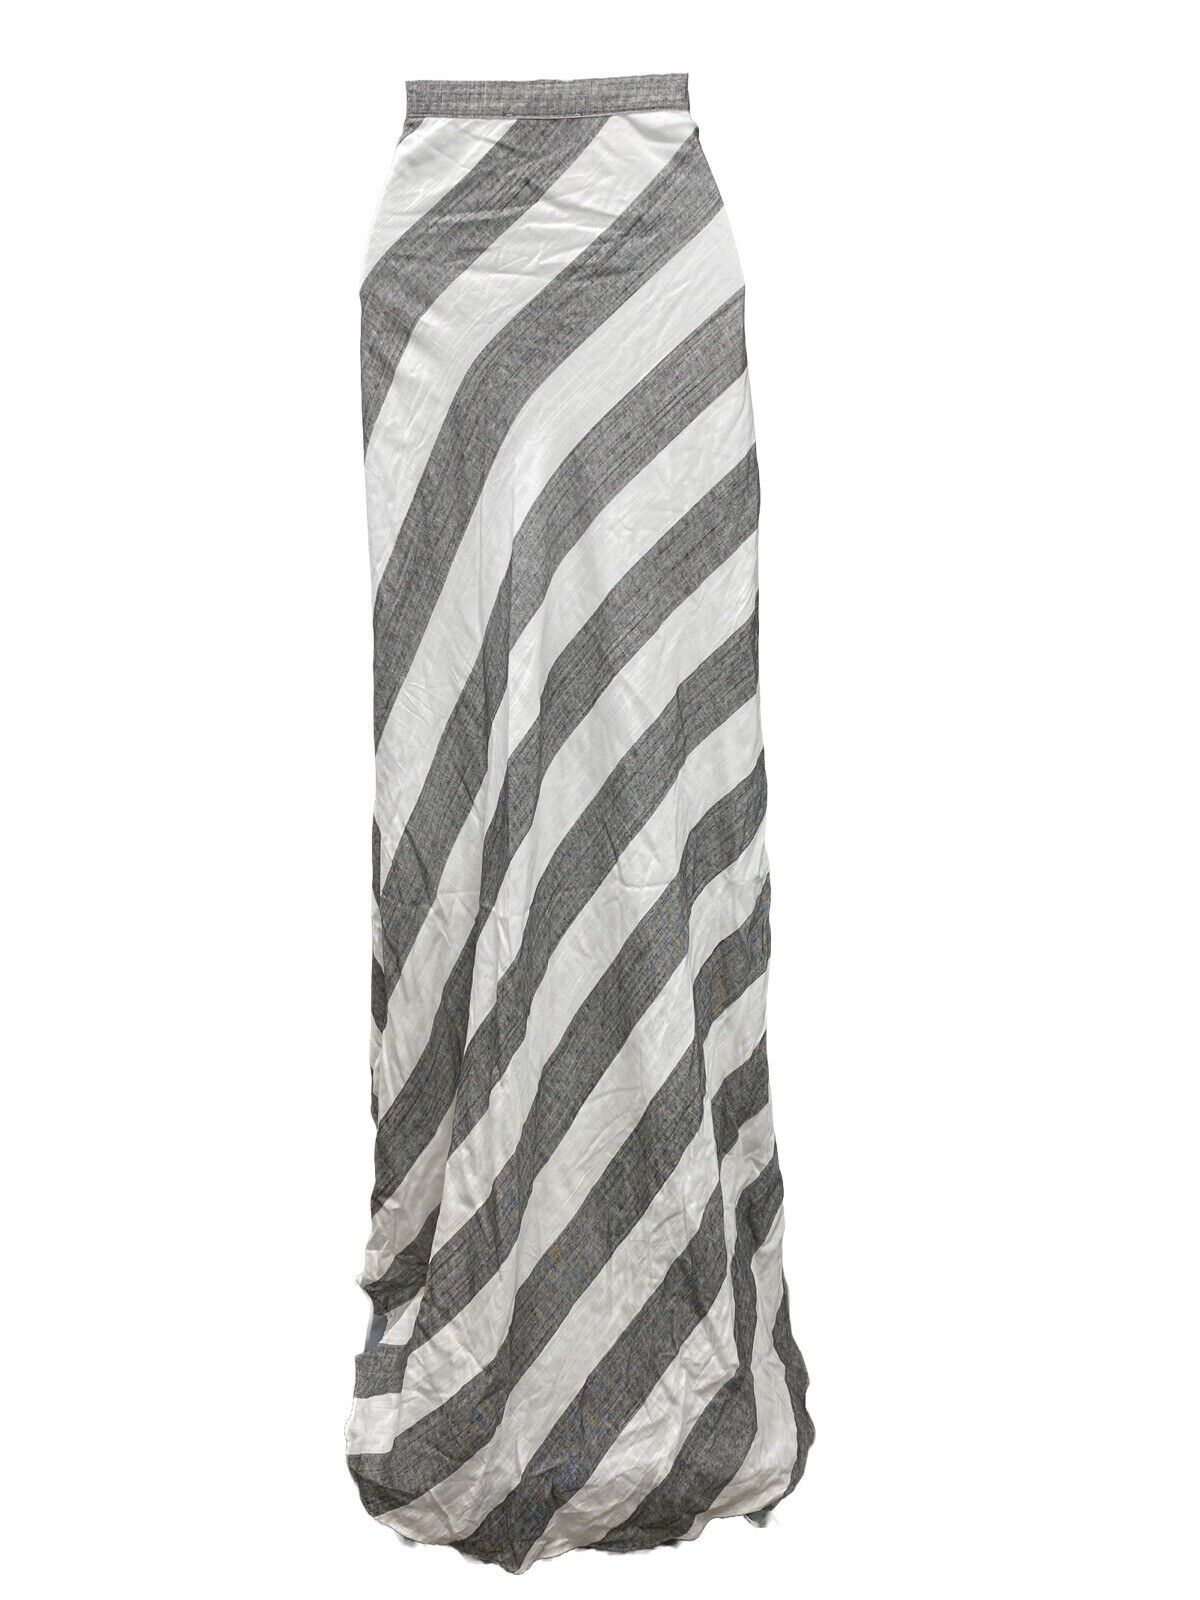 NEW Lulu's Women's White/Gray Striped Lined Wrap Skirt - XL